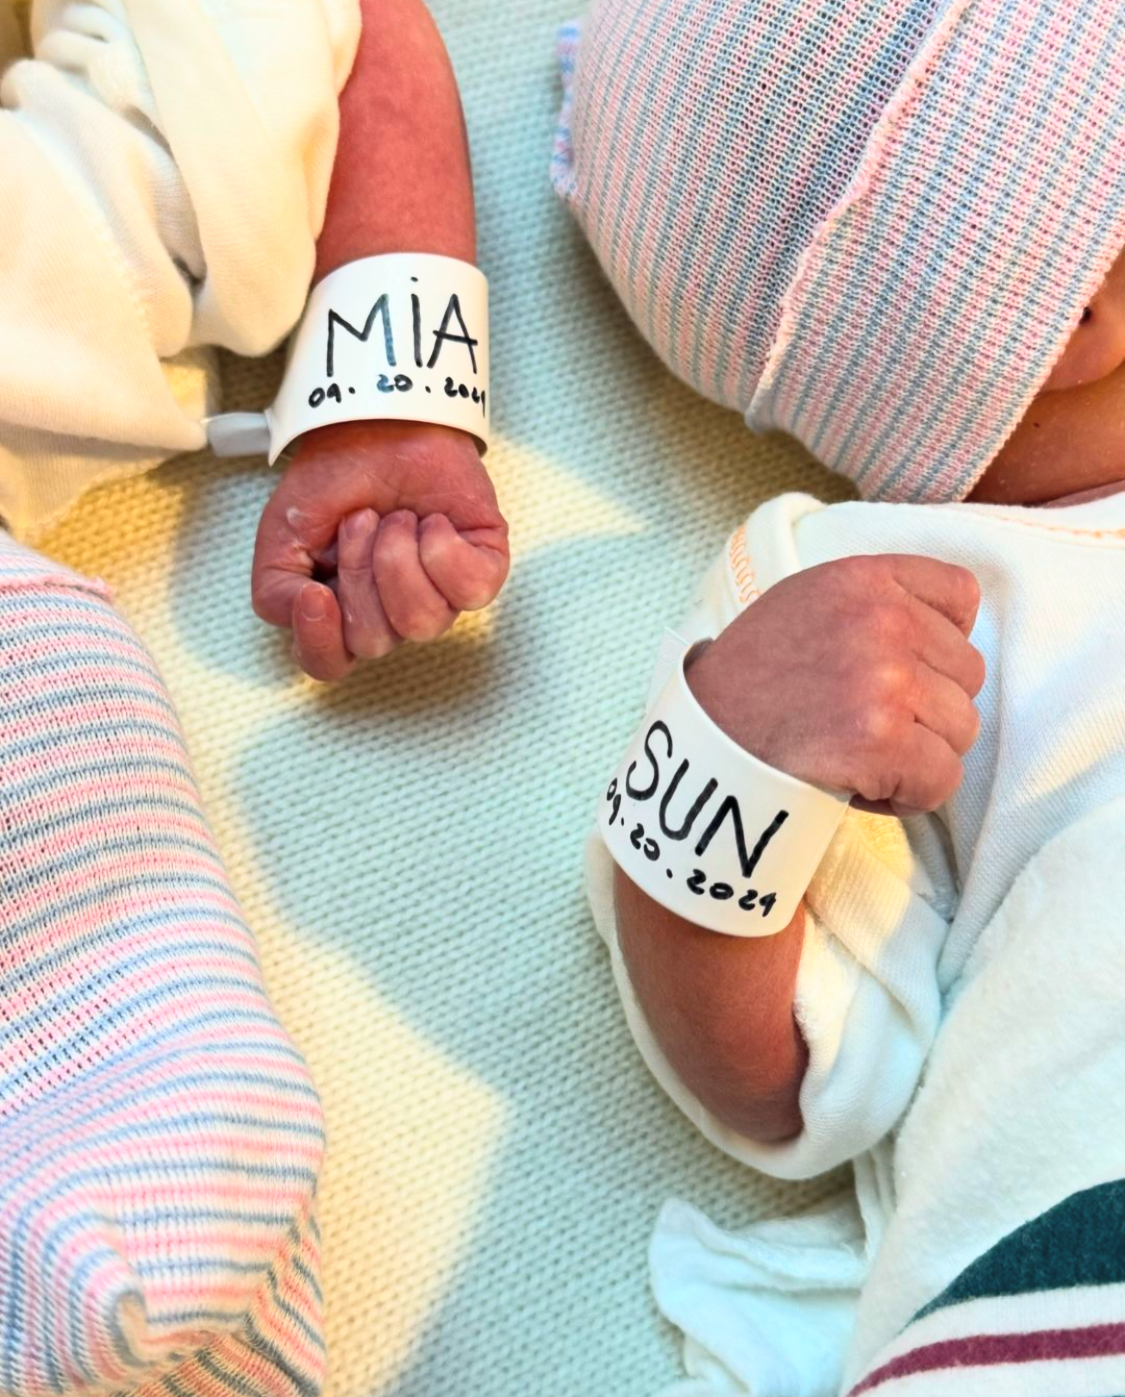 Baby news – Simon Porte Jacquemus i njegov suprug Marco Maestri postali su roditelji